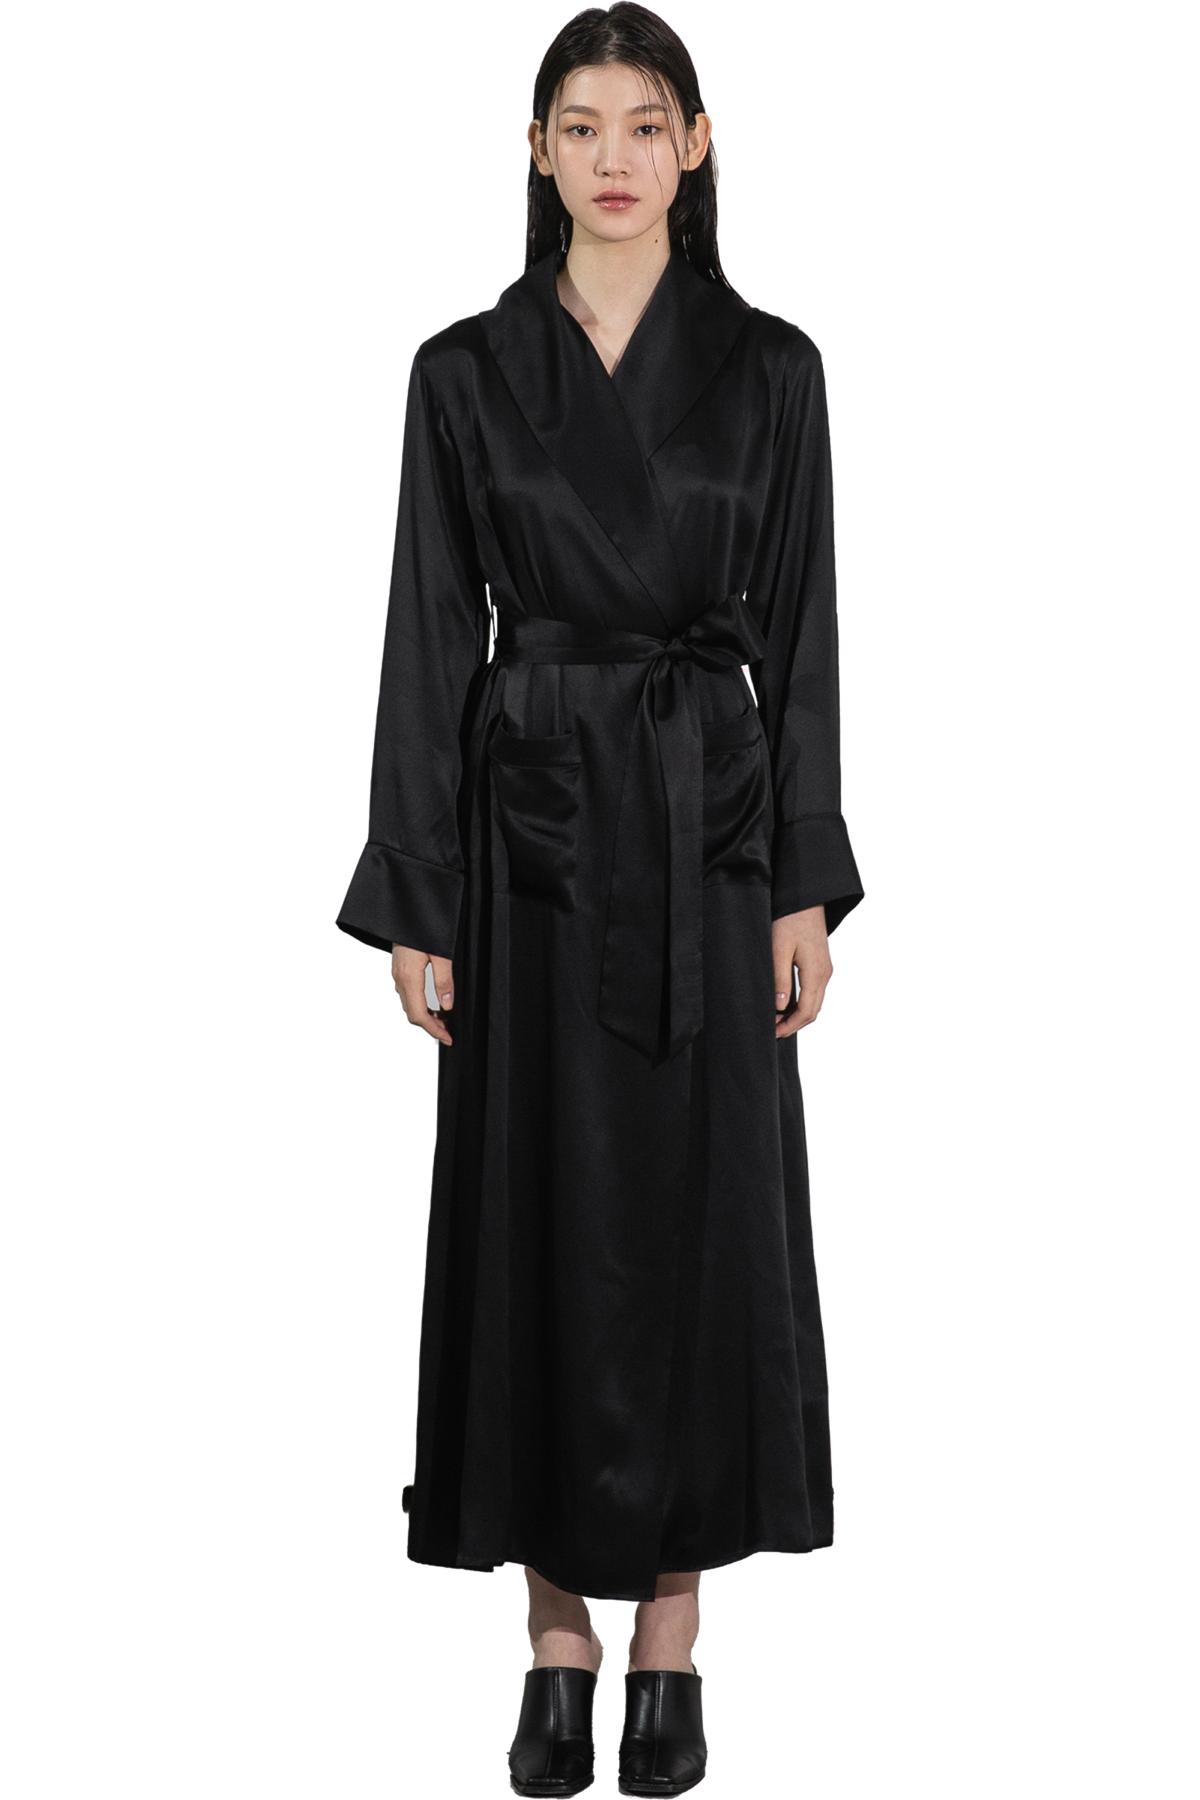 Black Satin Nightgown